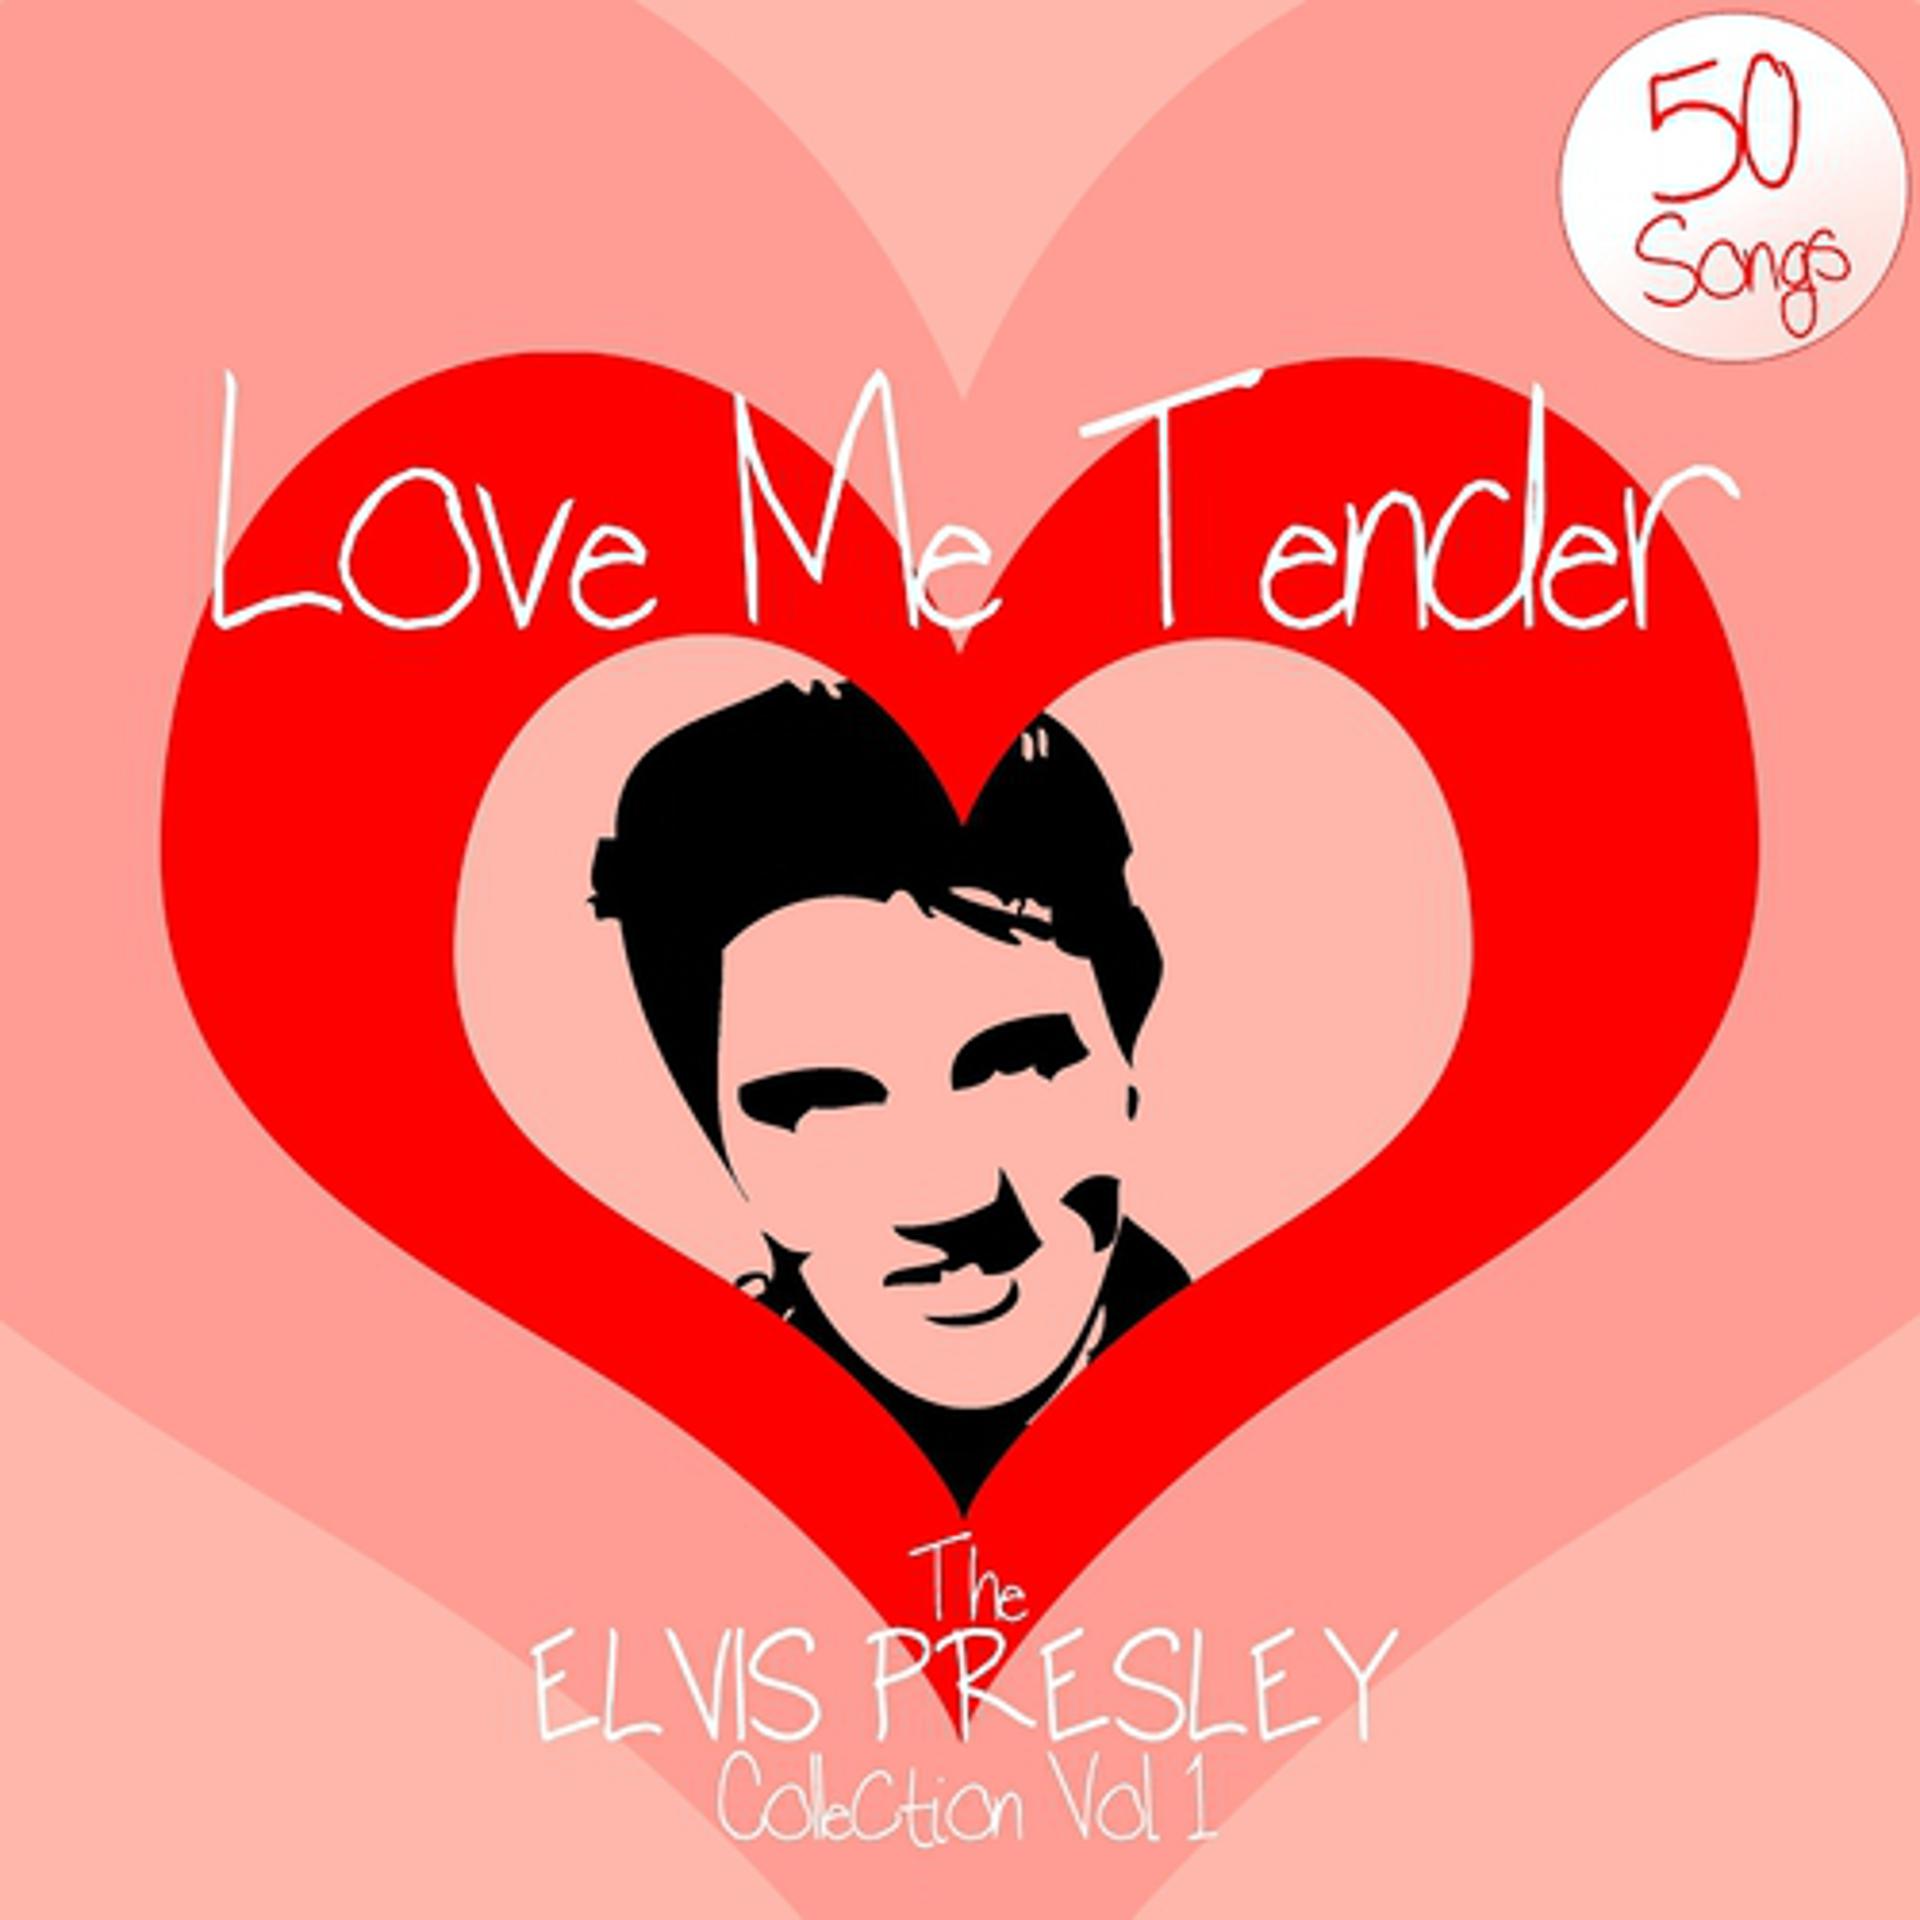 Love me tender элвис. Elvis Presley Love me tender. Elvis Presley Love me tender обложка. Картинка Элвис я тебя люблю.